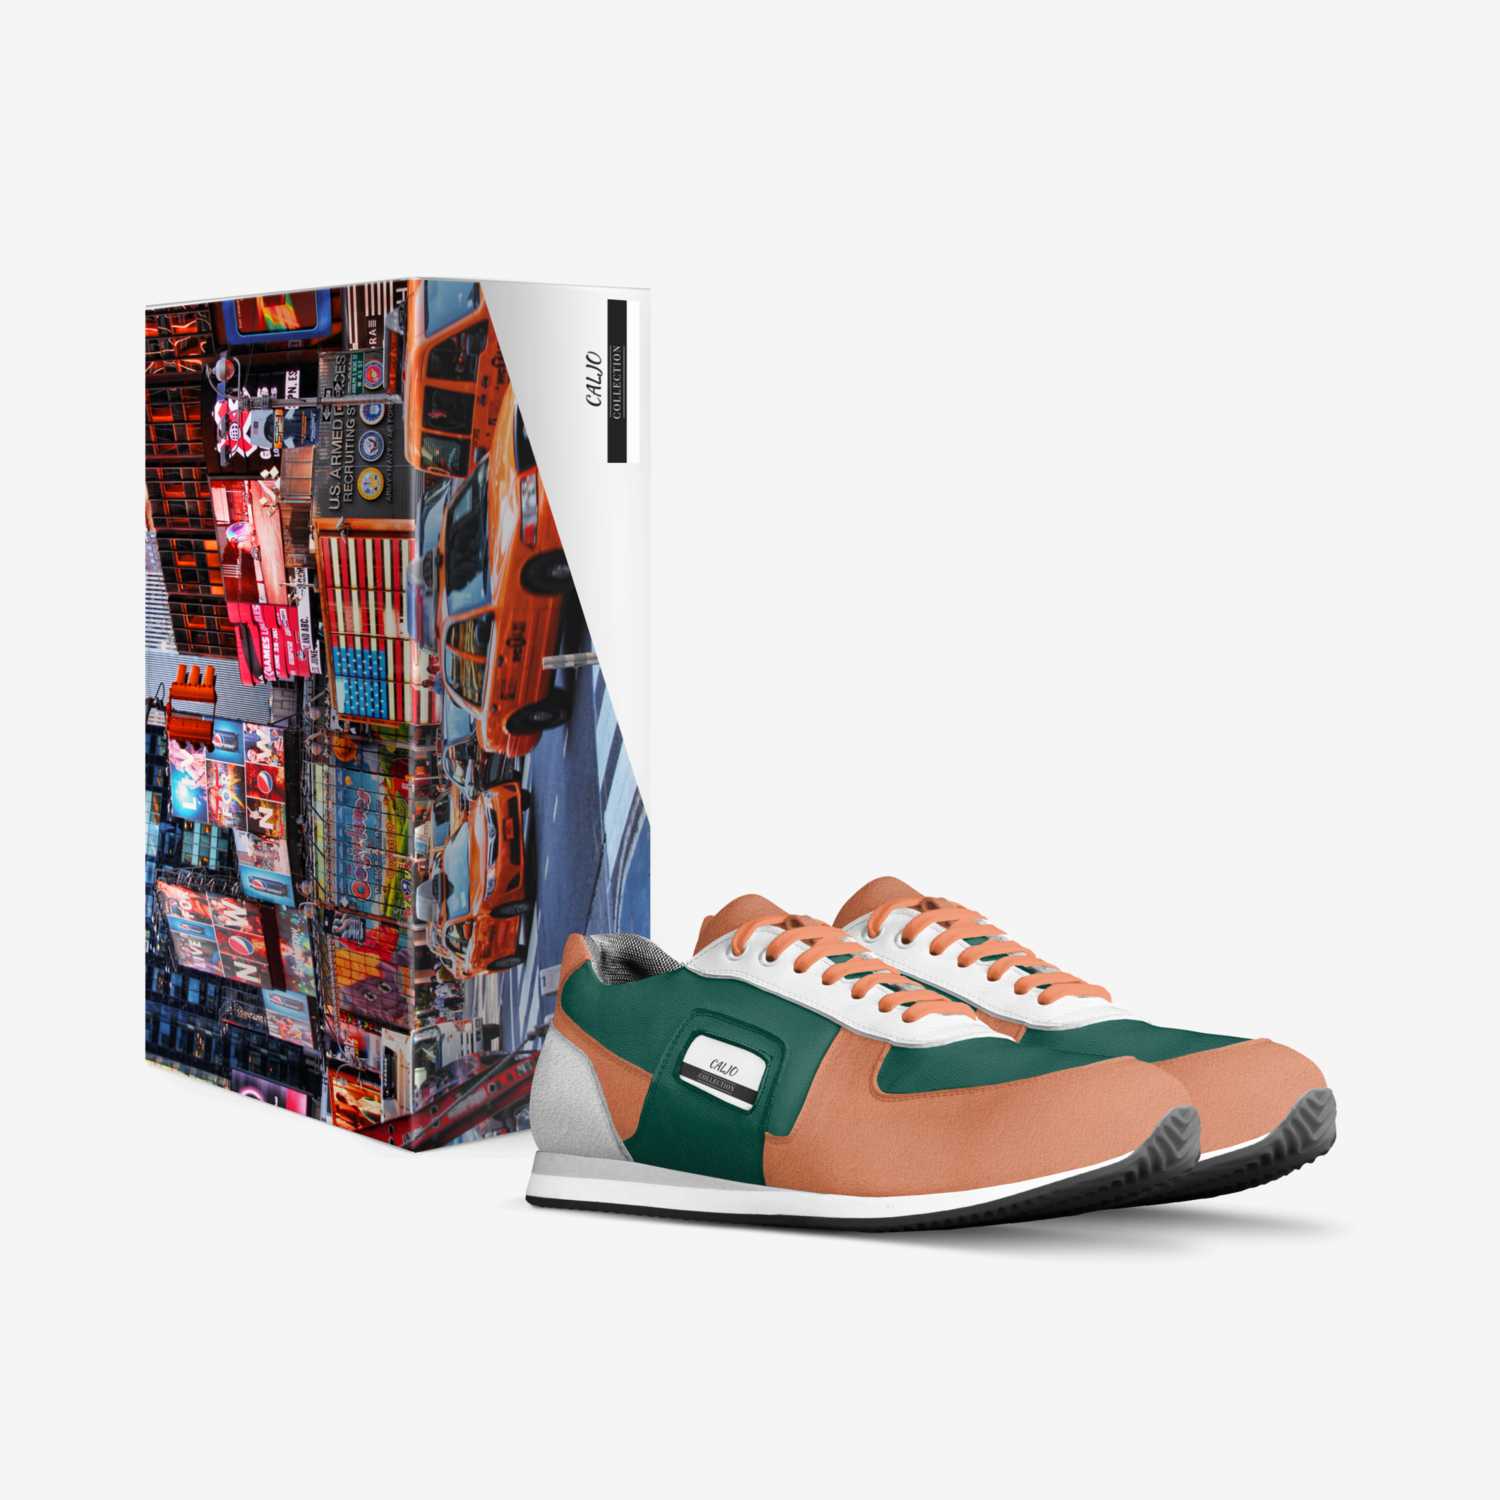 CALJO custom made in Italy shoes by Calvin Johnson | Box view